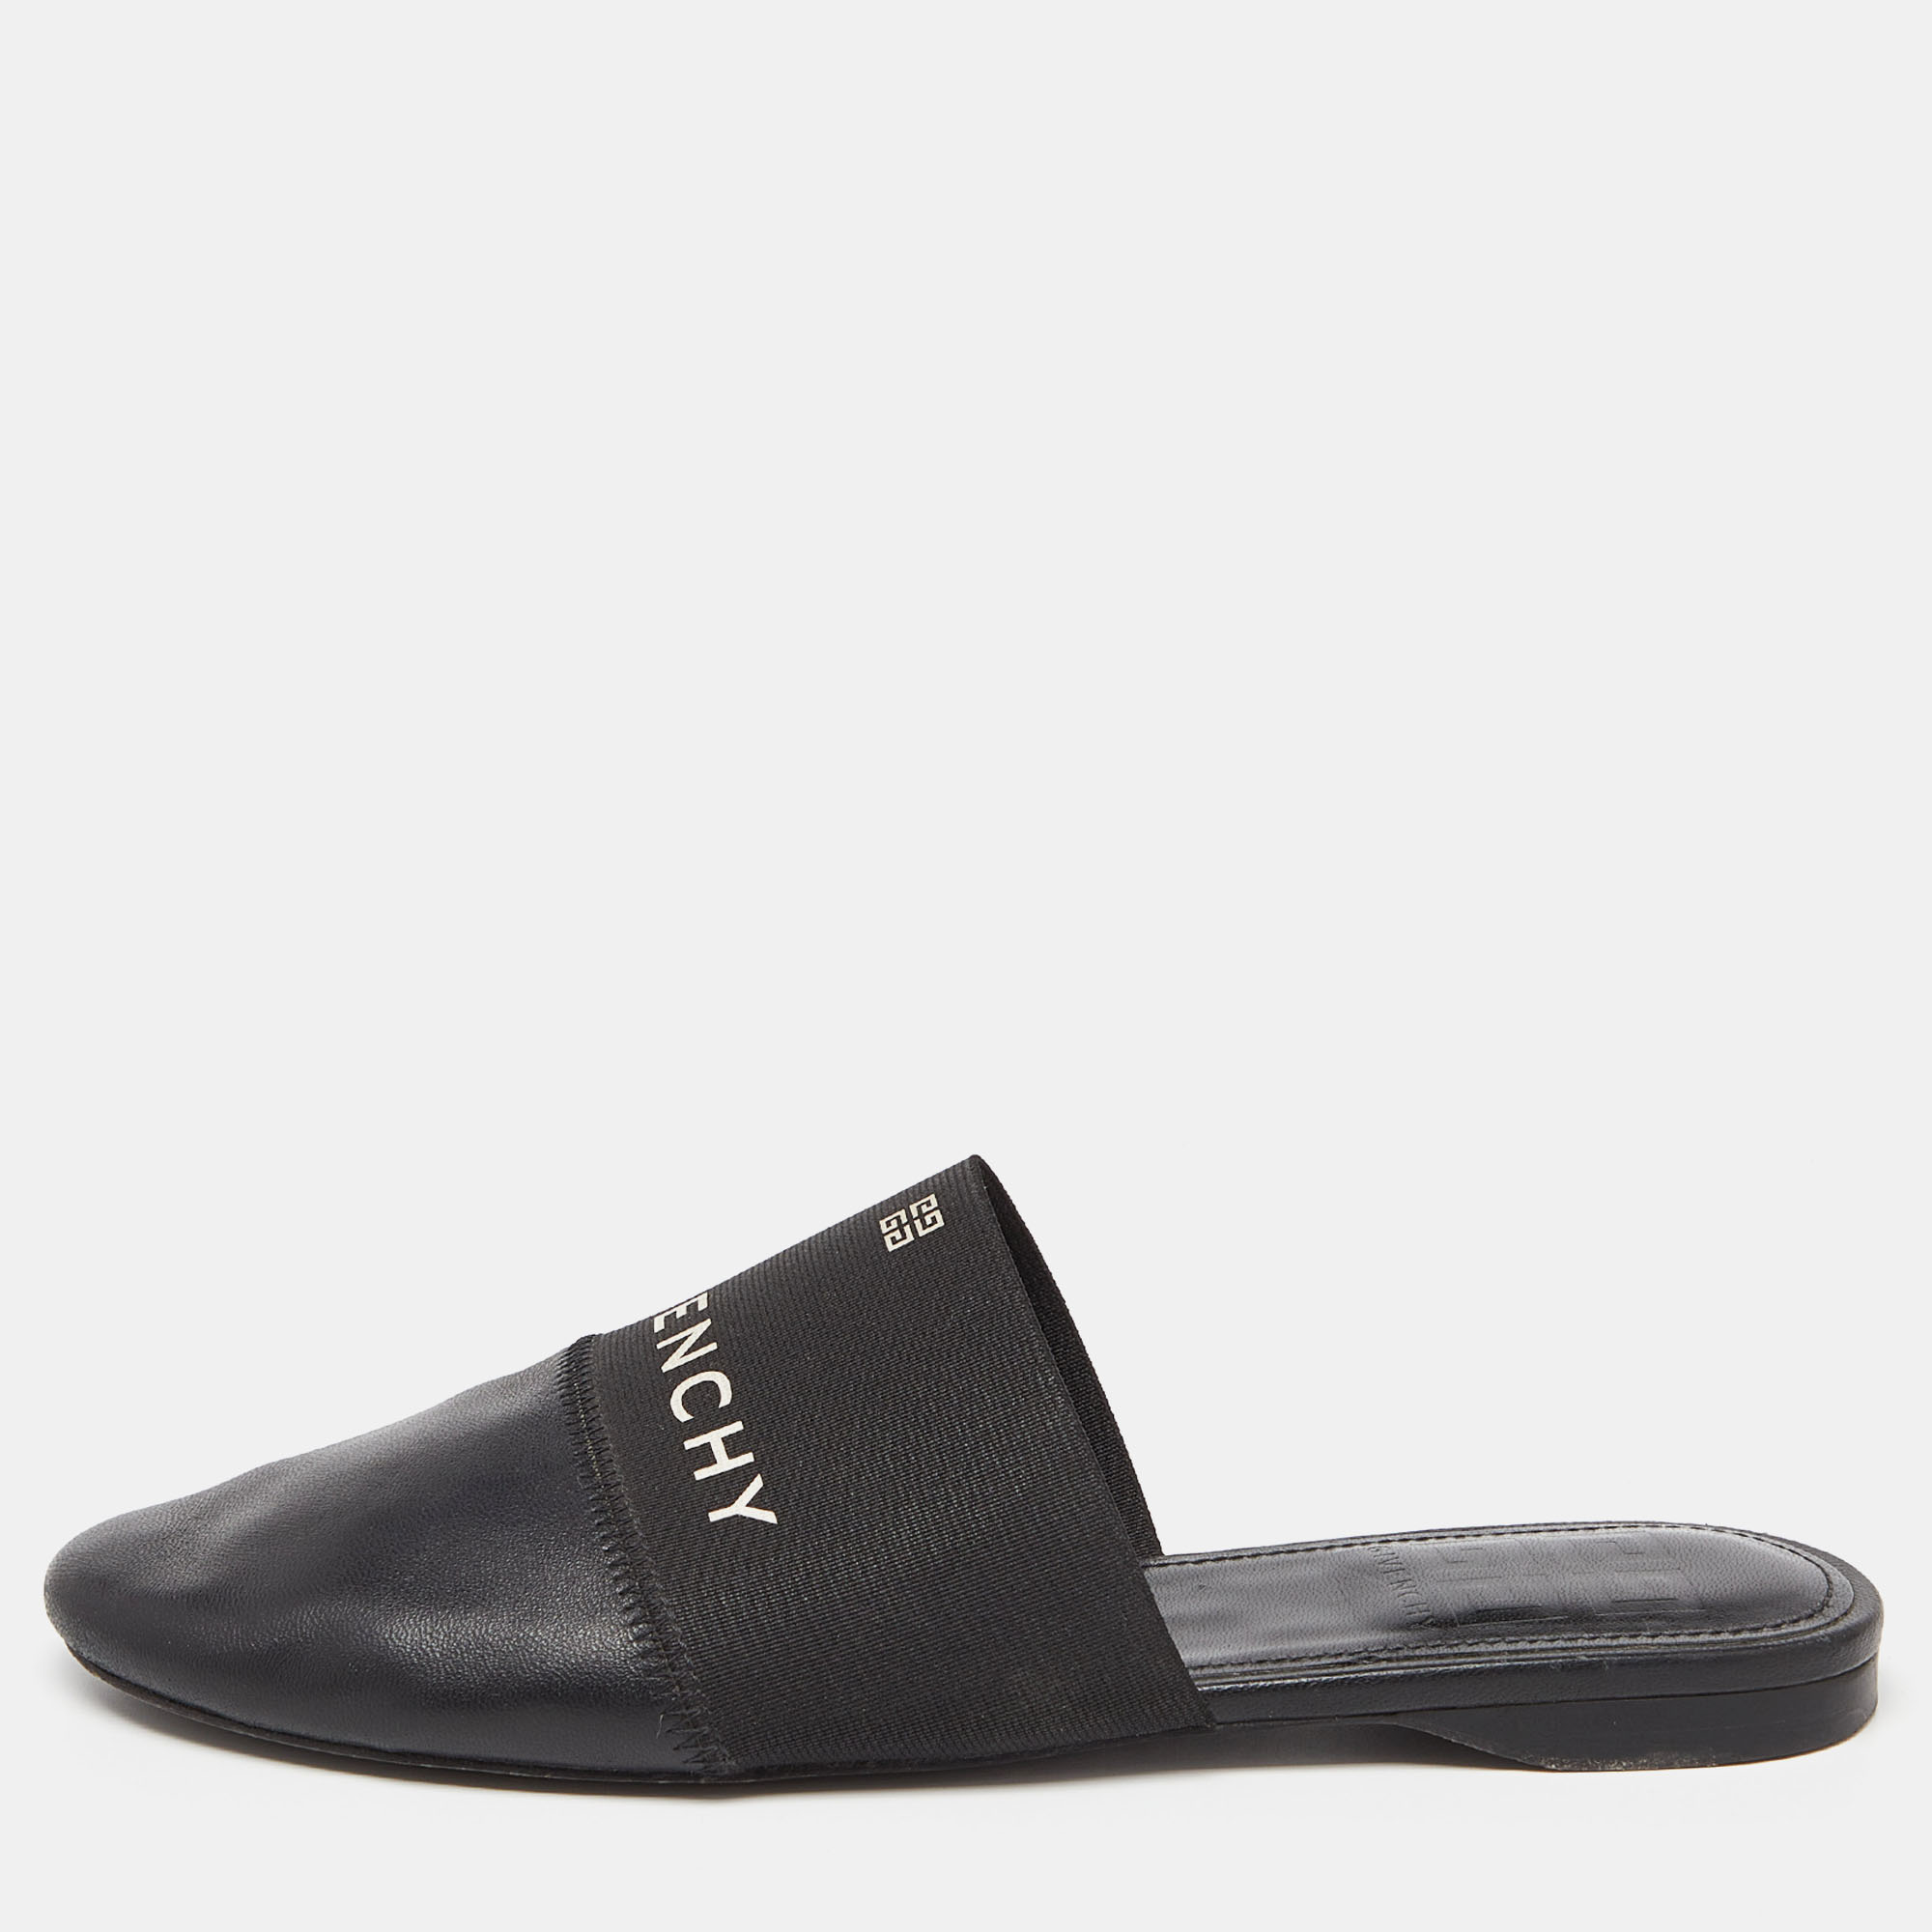 Givenchy black leather and elastic logo flat mules size 36